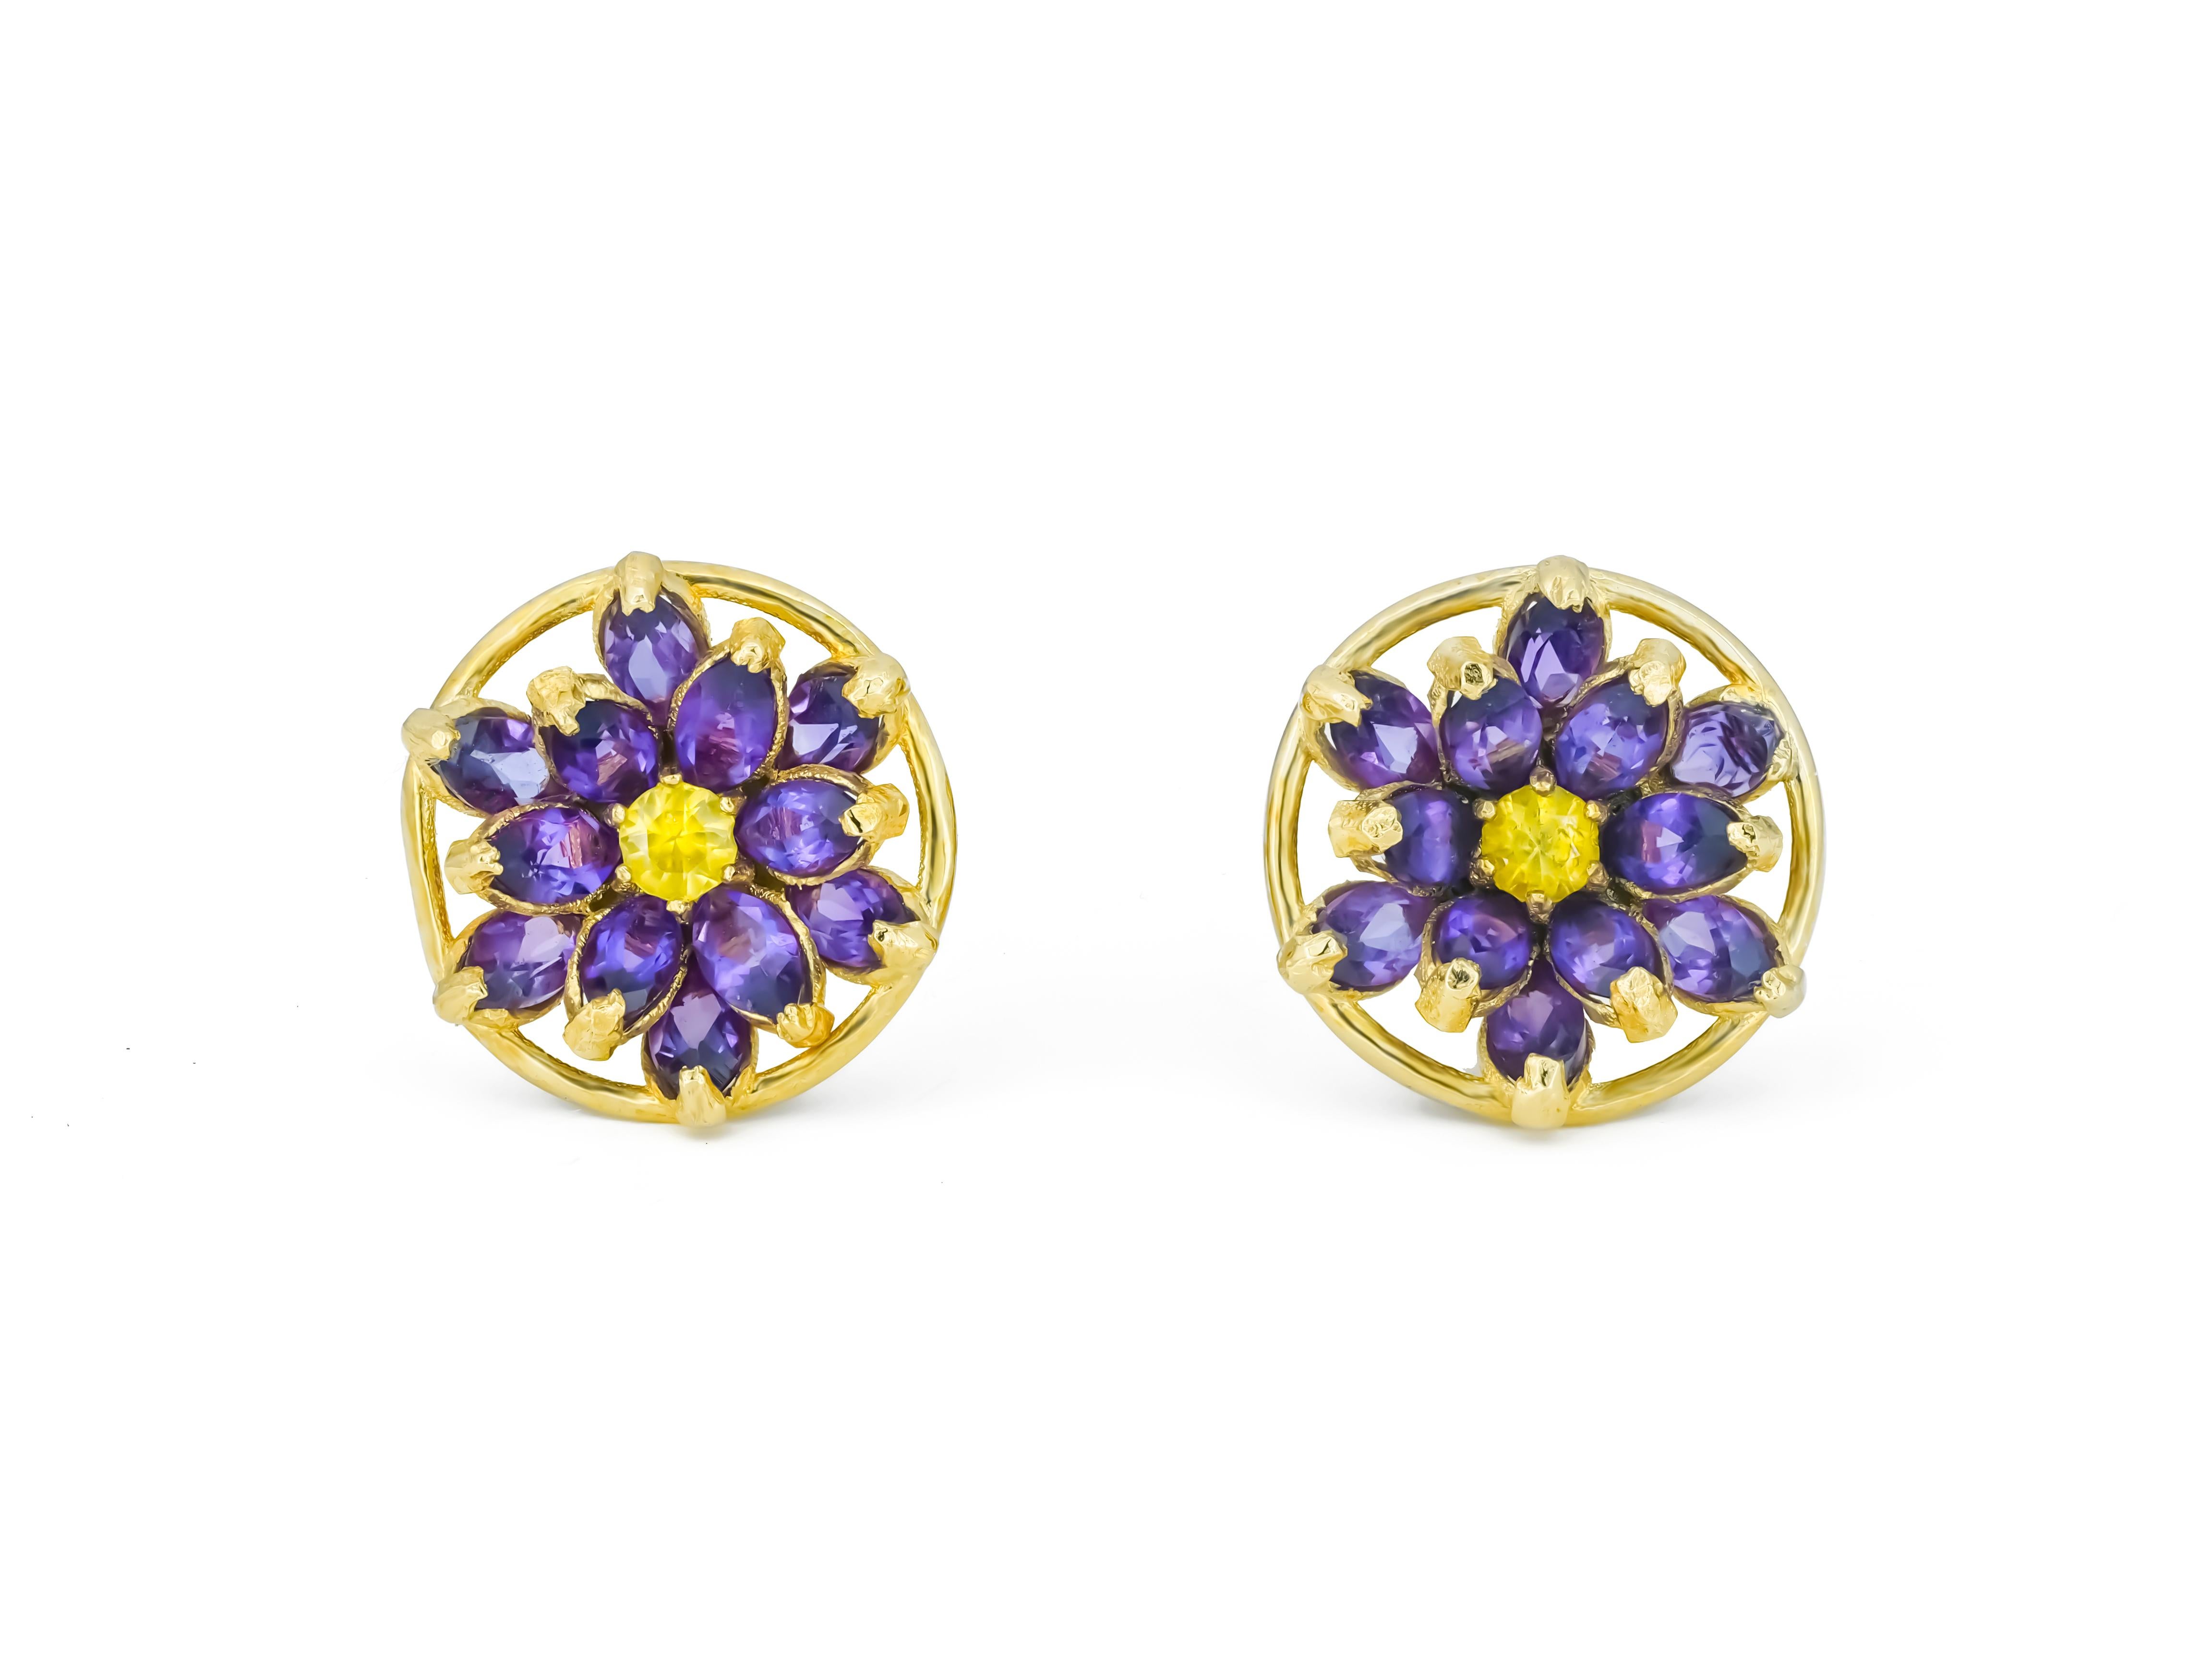 Lotus Flower Earrings Studs in 14K Gold, Amethyst and Sapphires Earrings! For Sale 7